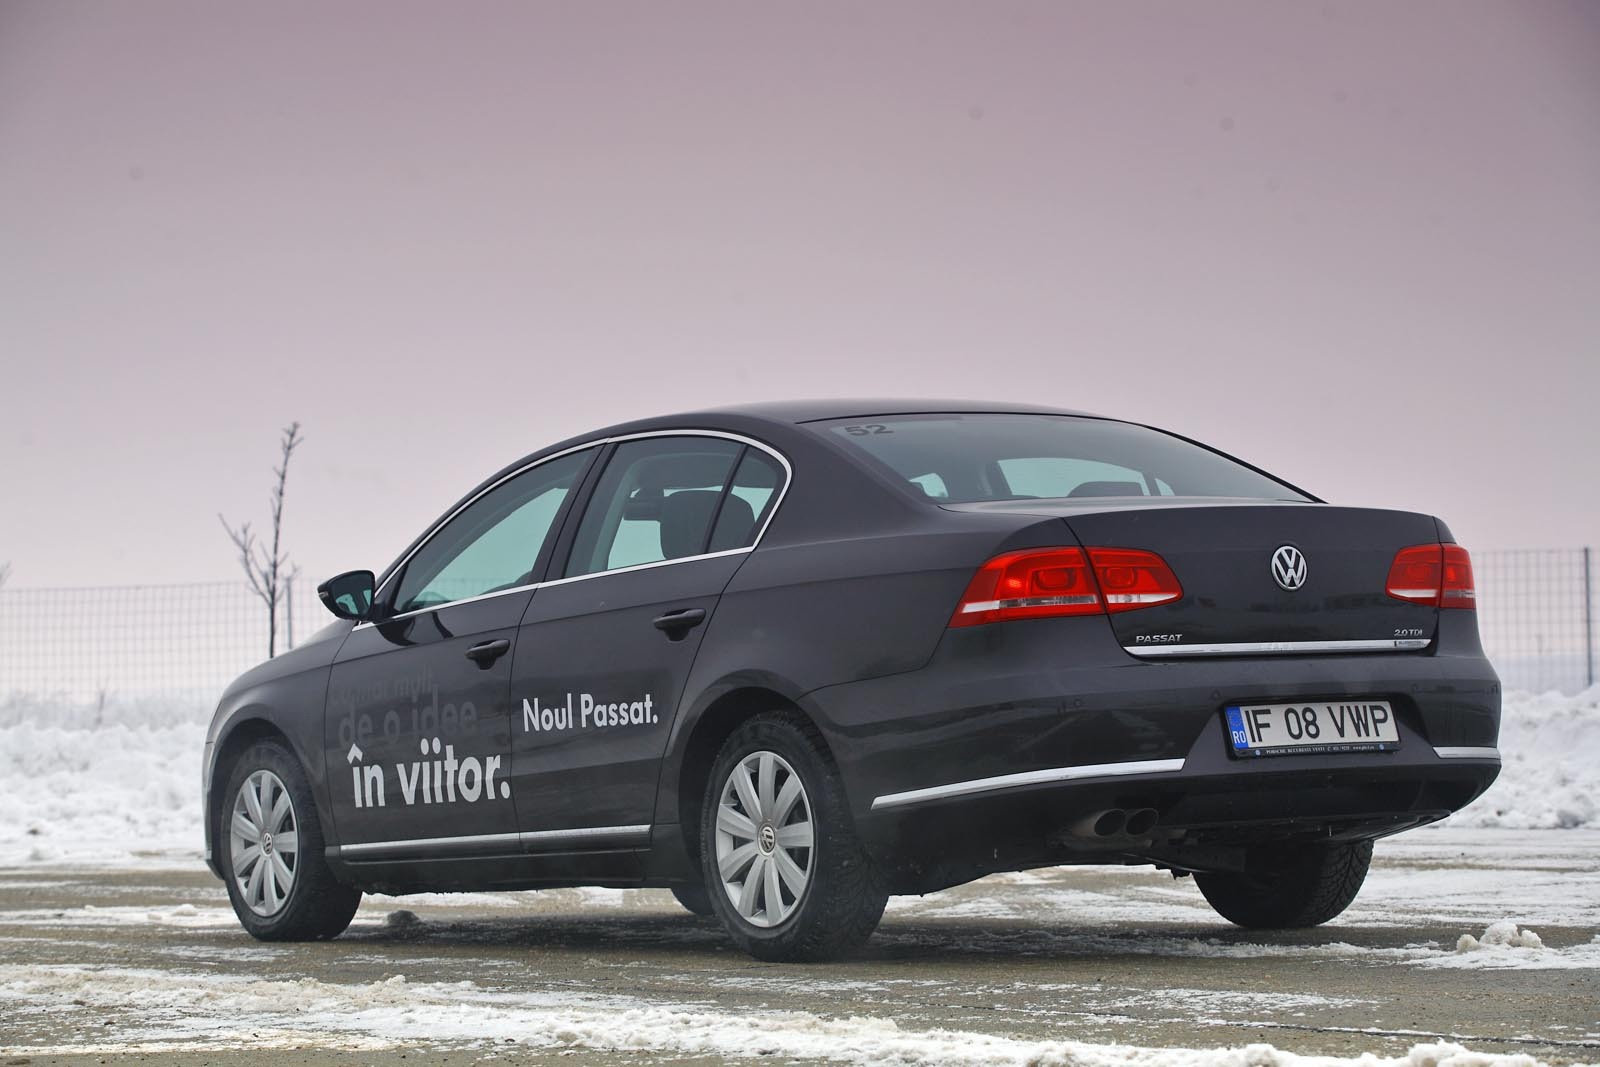 Volkswagen Passat 2.0 TDI 140 pleaca de la 23.000 euro